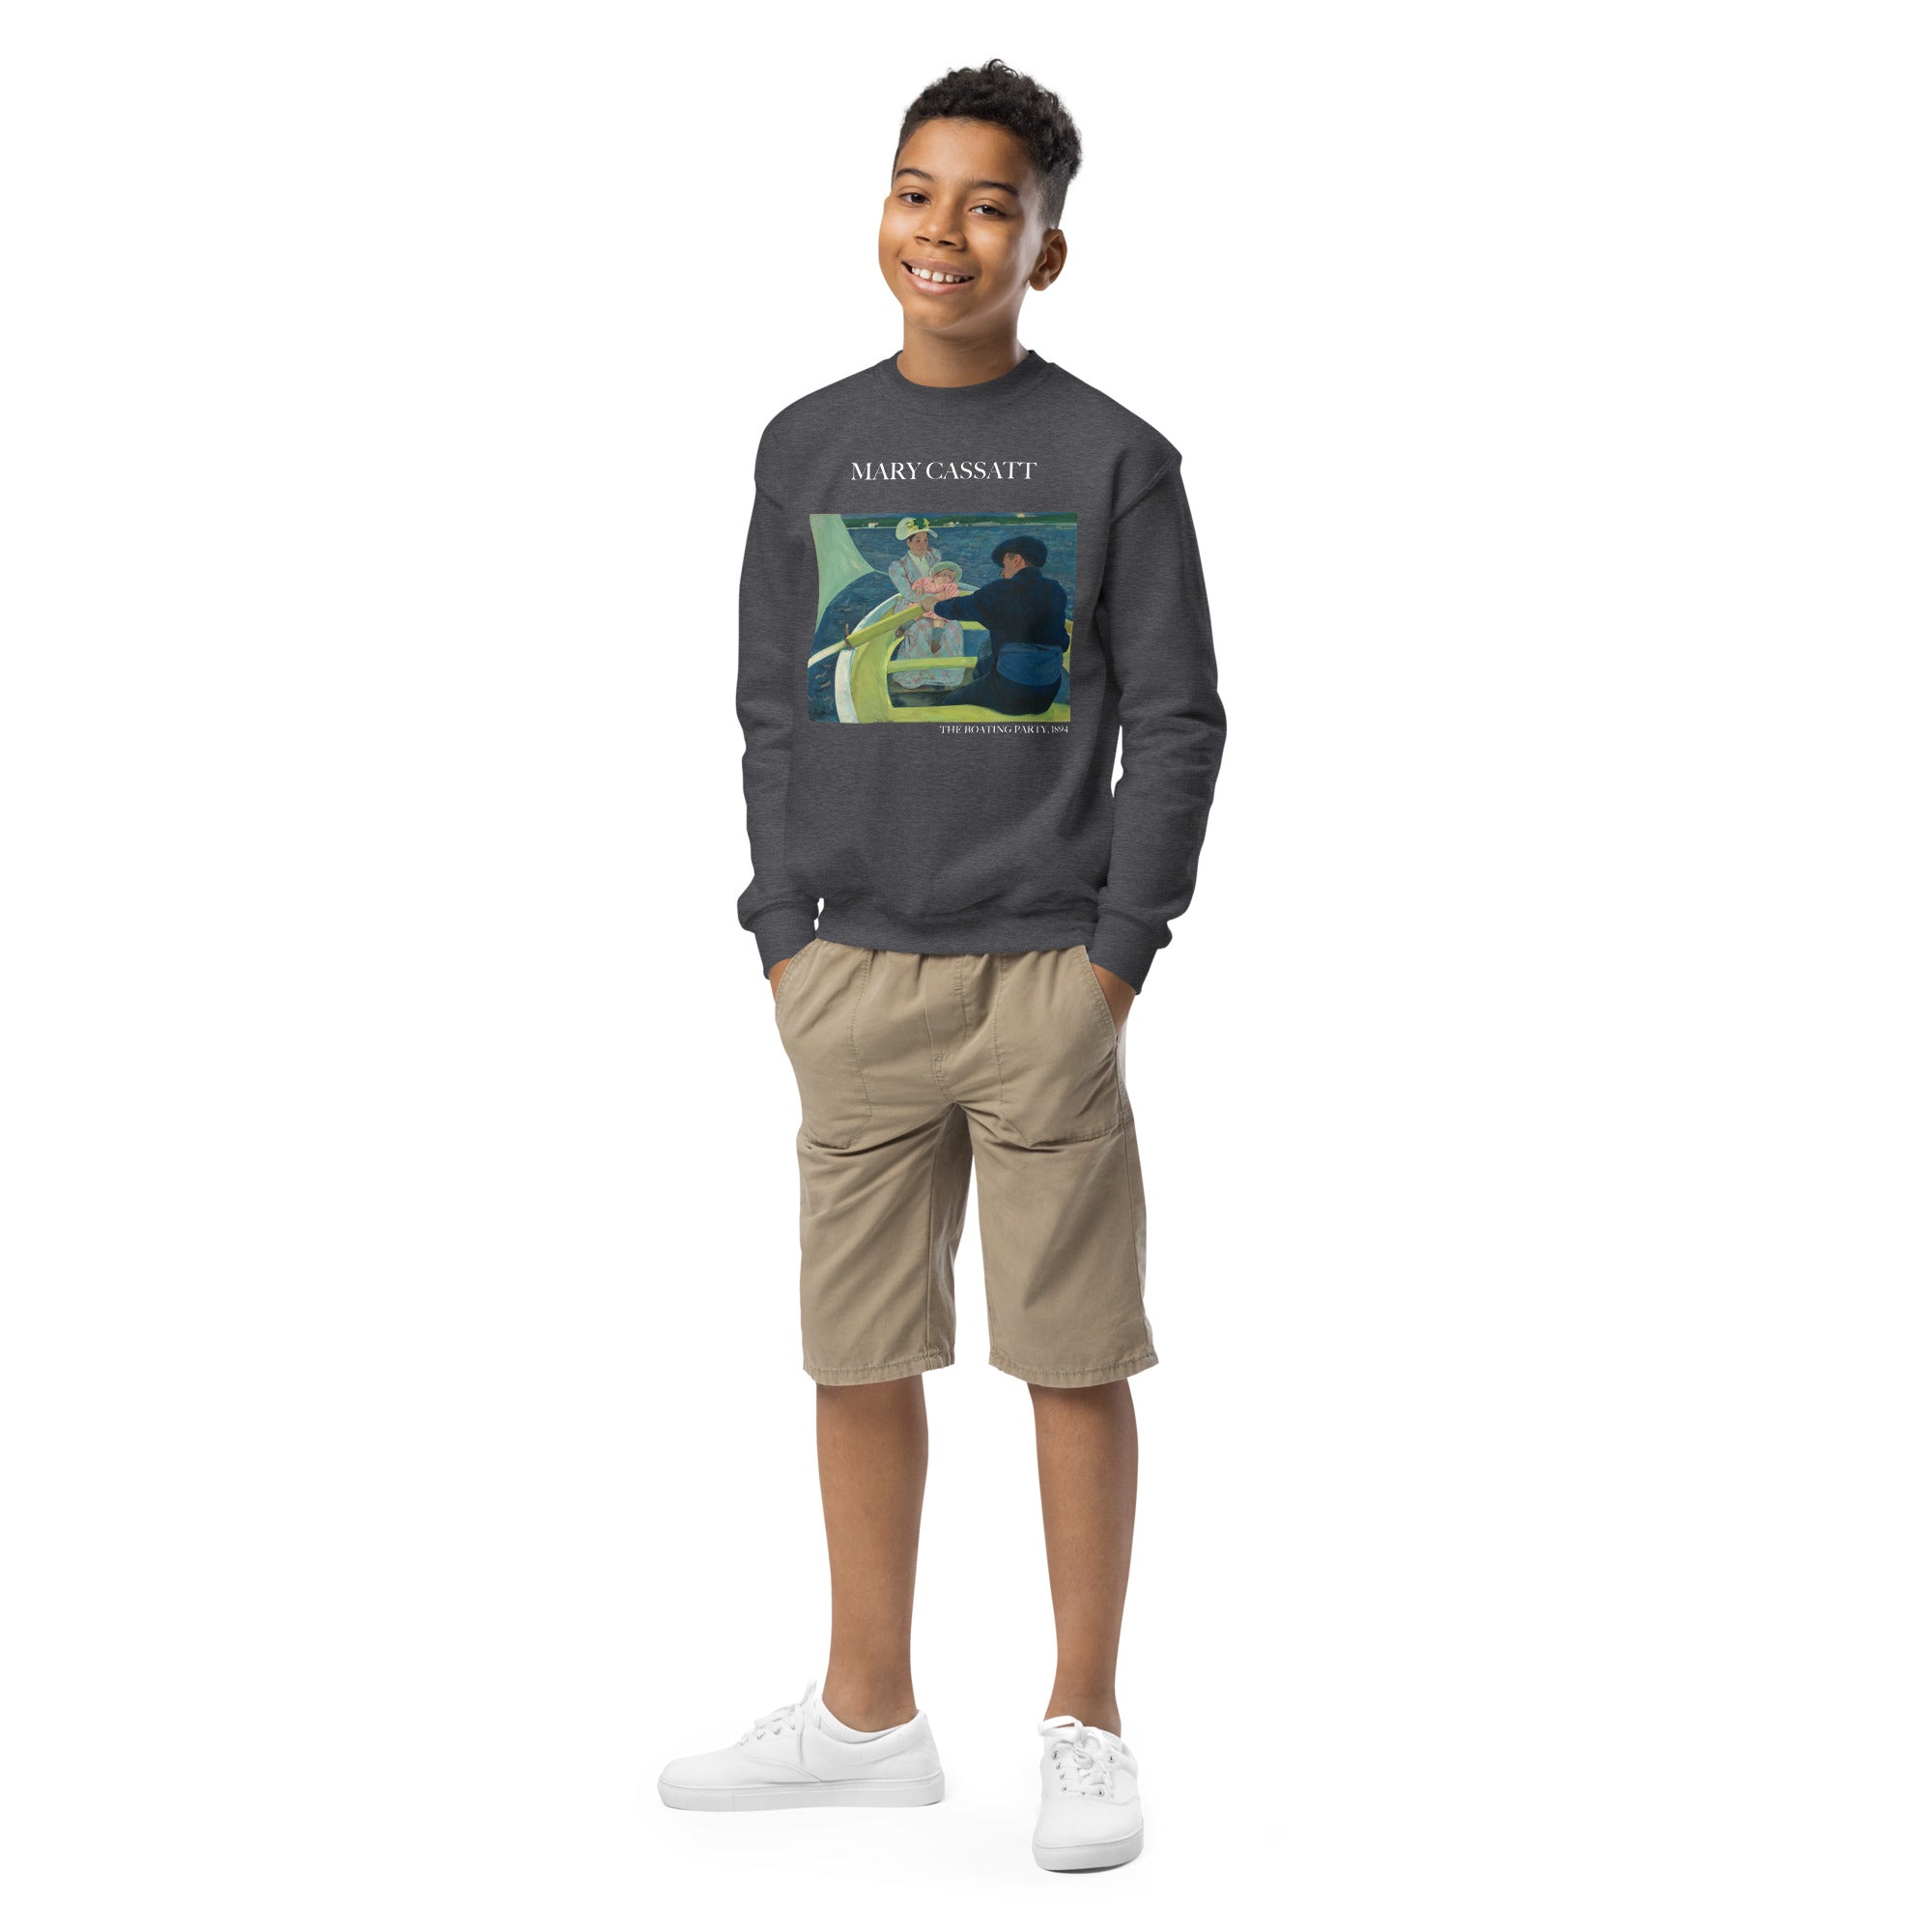 Mary Cassatt 'The Boating Party' Famous Painting Crewneck Sweatshirt | Premium Youth Art Sweatshirt